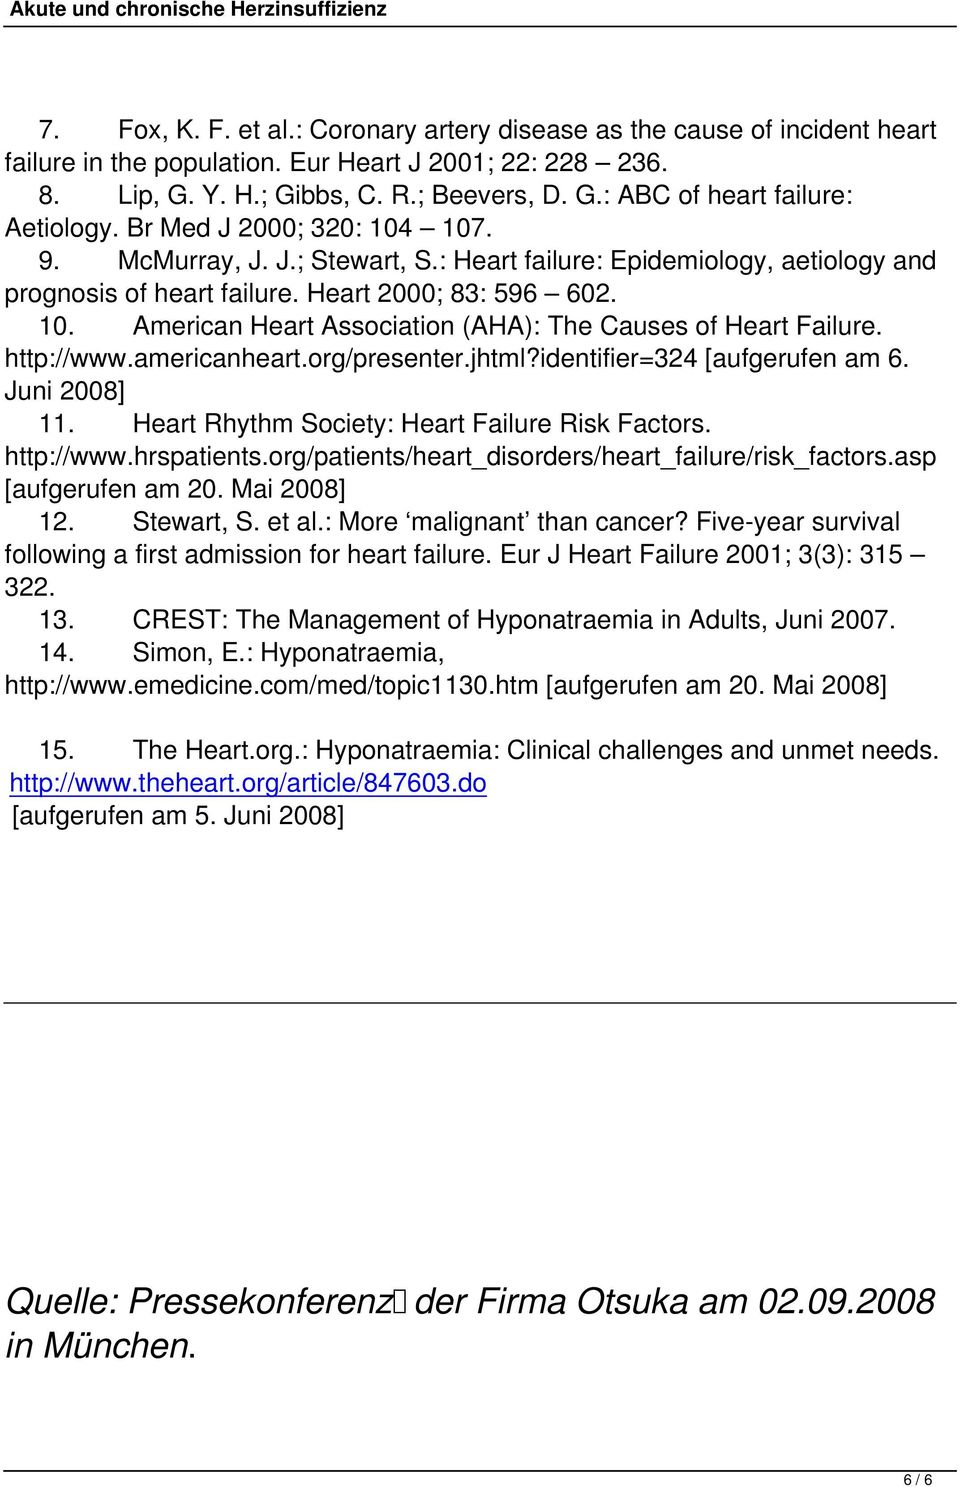 http://www.americanheart.org/presenter.jhtml?identifier=324 [aufgerufen am 6. Juni 2008] 11. Heart Rhythm Society: Heart Failure Risk Factors. http://www.hrspatients.